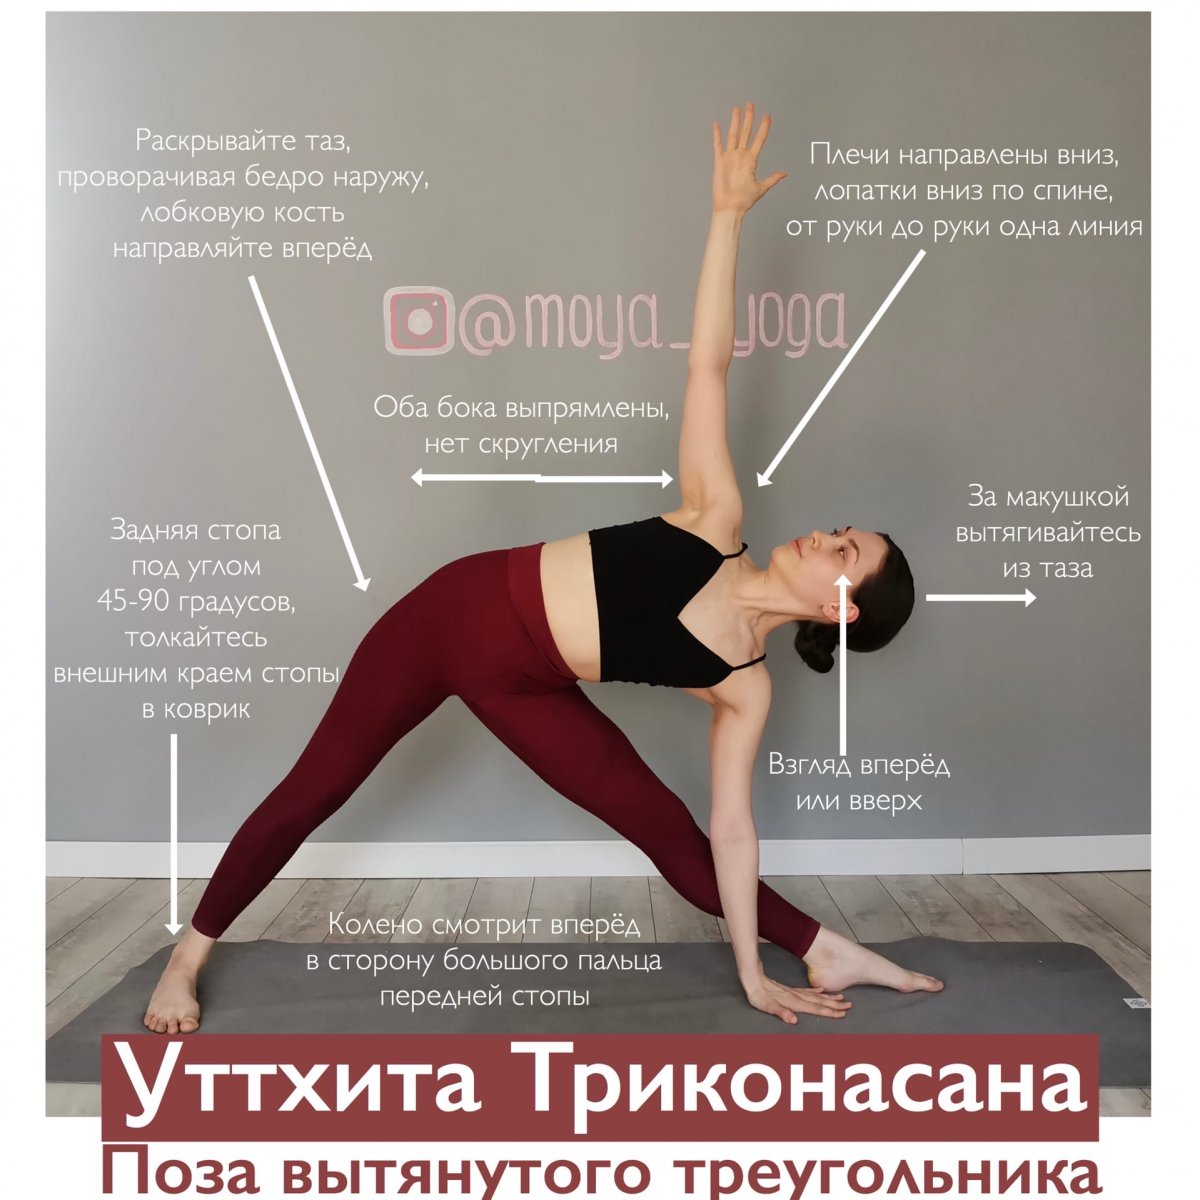 Паривритта-триконасана — поза обратного треугольника. анатомия йоги